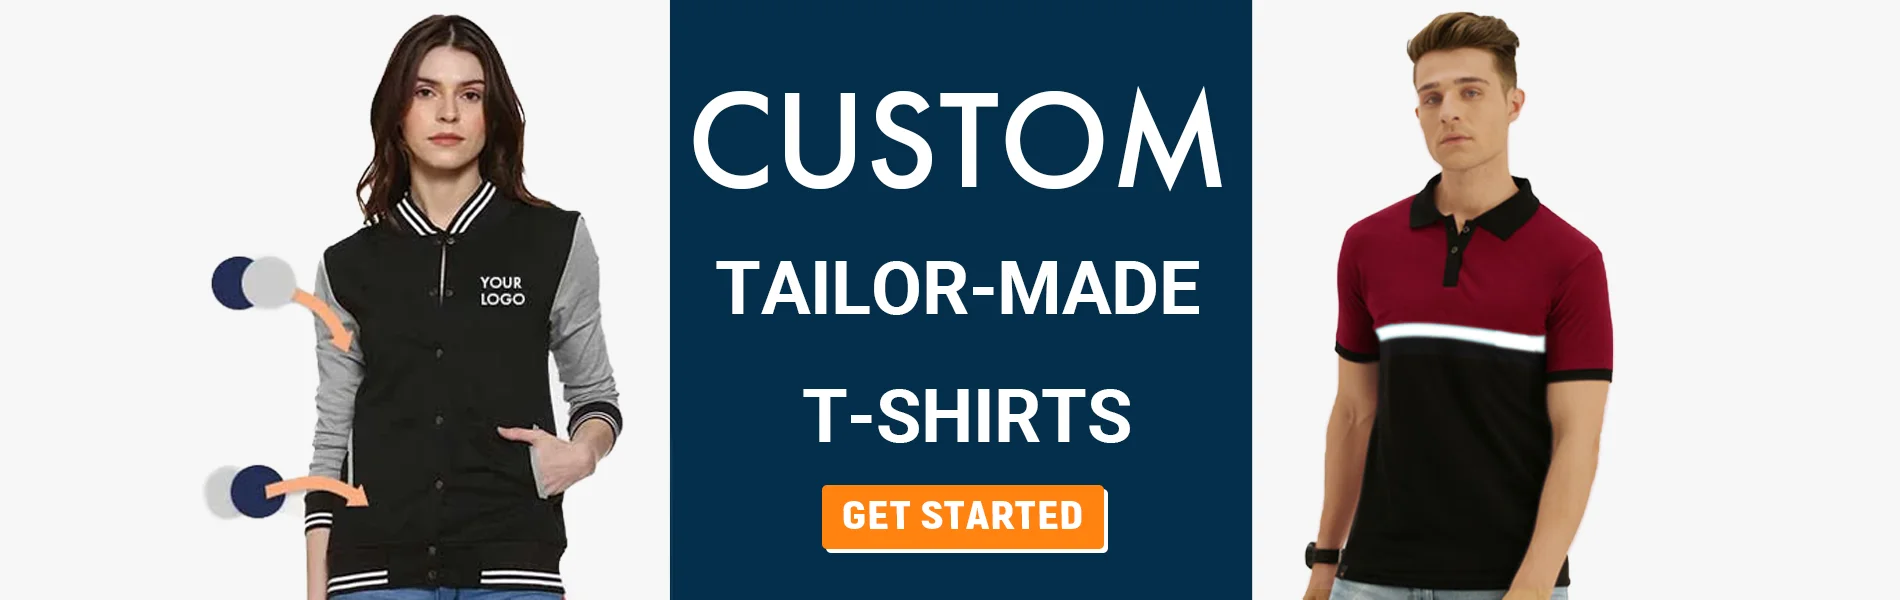 custom tailormade t-shirts kanpur